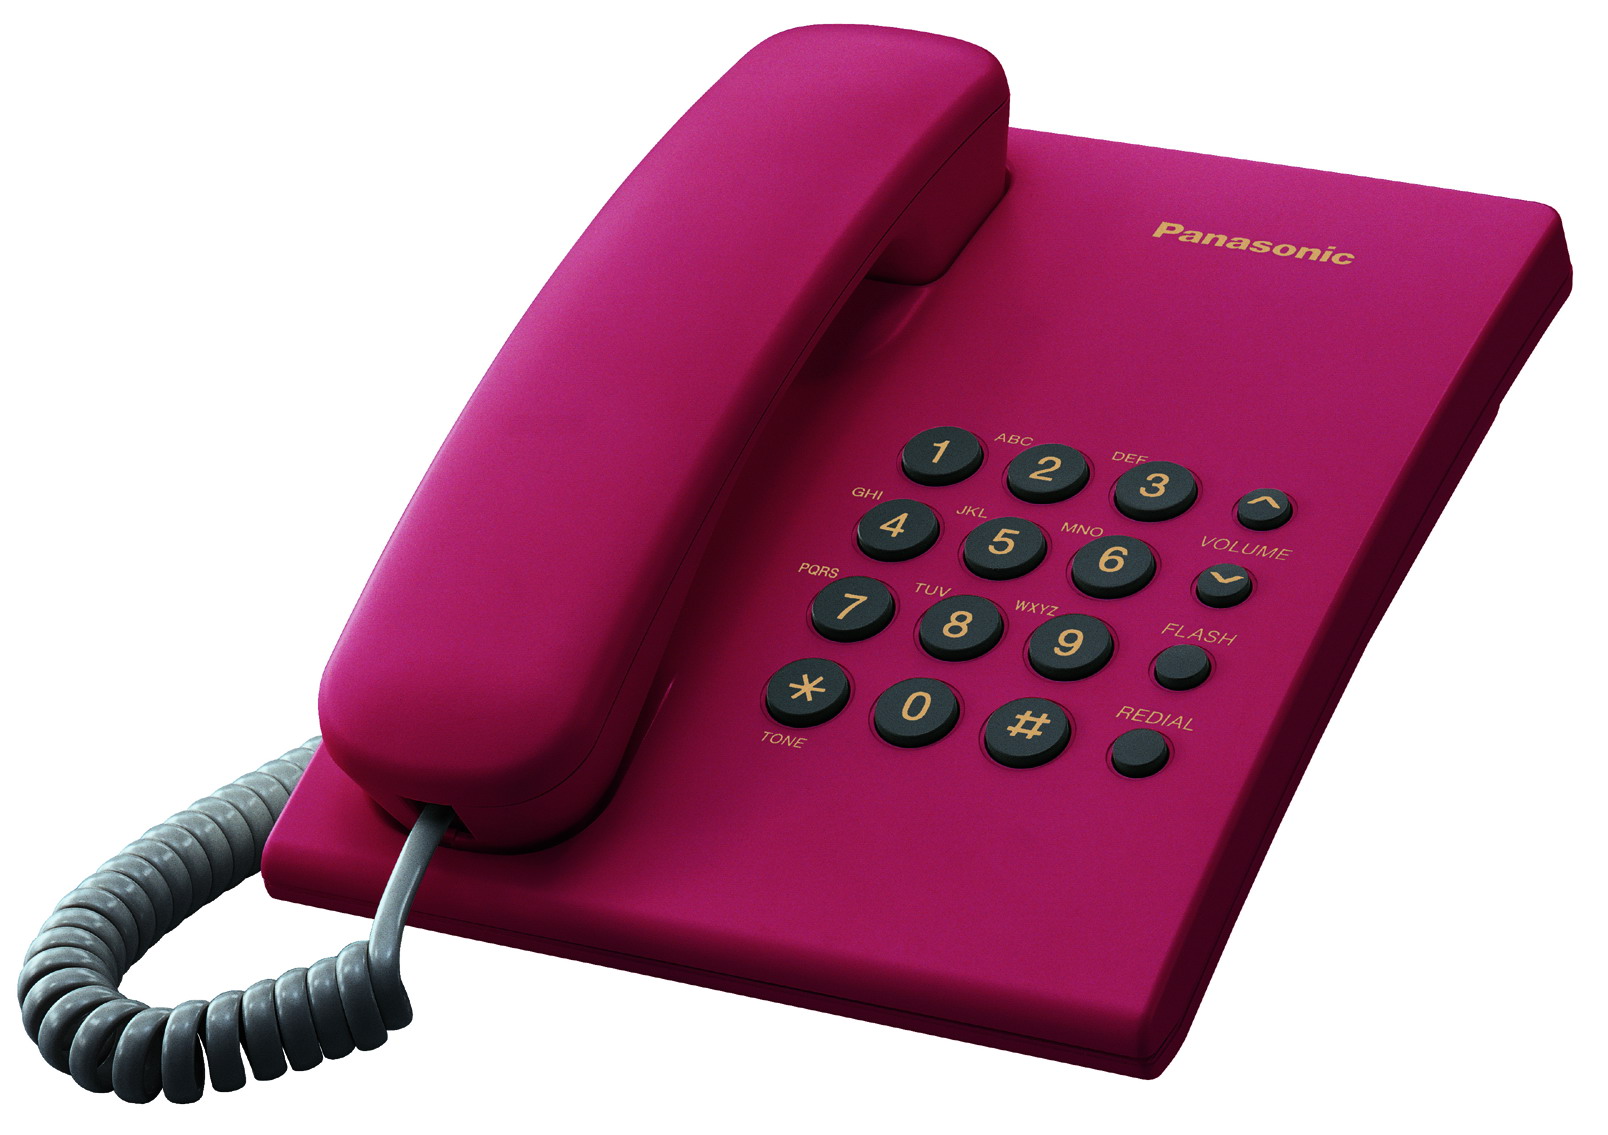 Panasonic kx ts2350. Телефонный аппарат Panasonic KX-ts2350. Телефон проводной Panasonic KX-ts2350. Аппарат телефонный проводной Panasonic KX-ts2350. Panasonic KX-ts500.